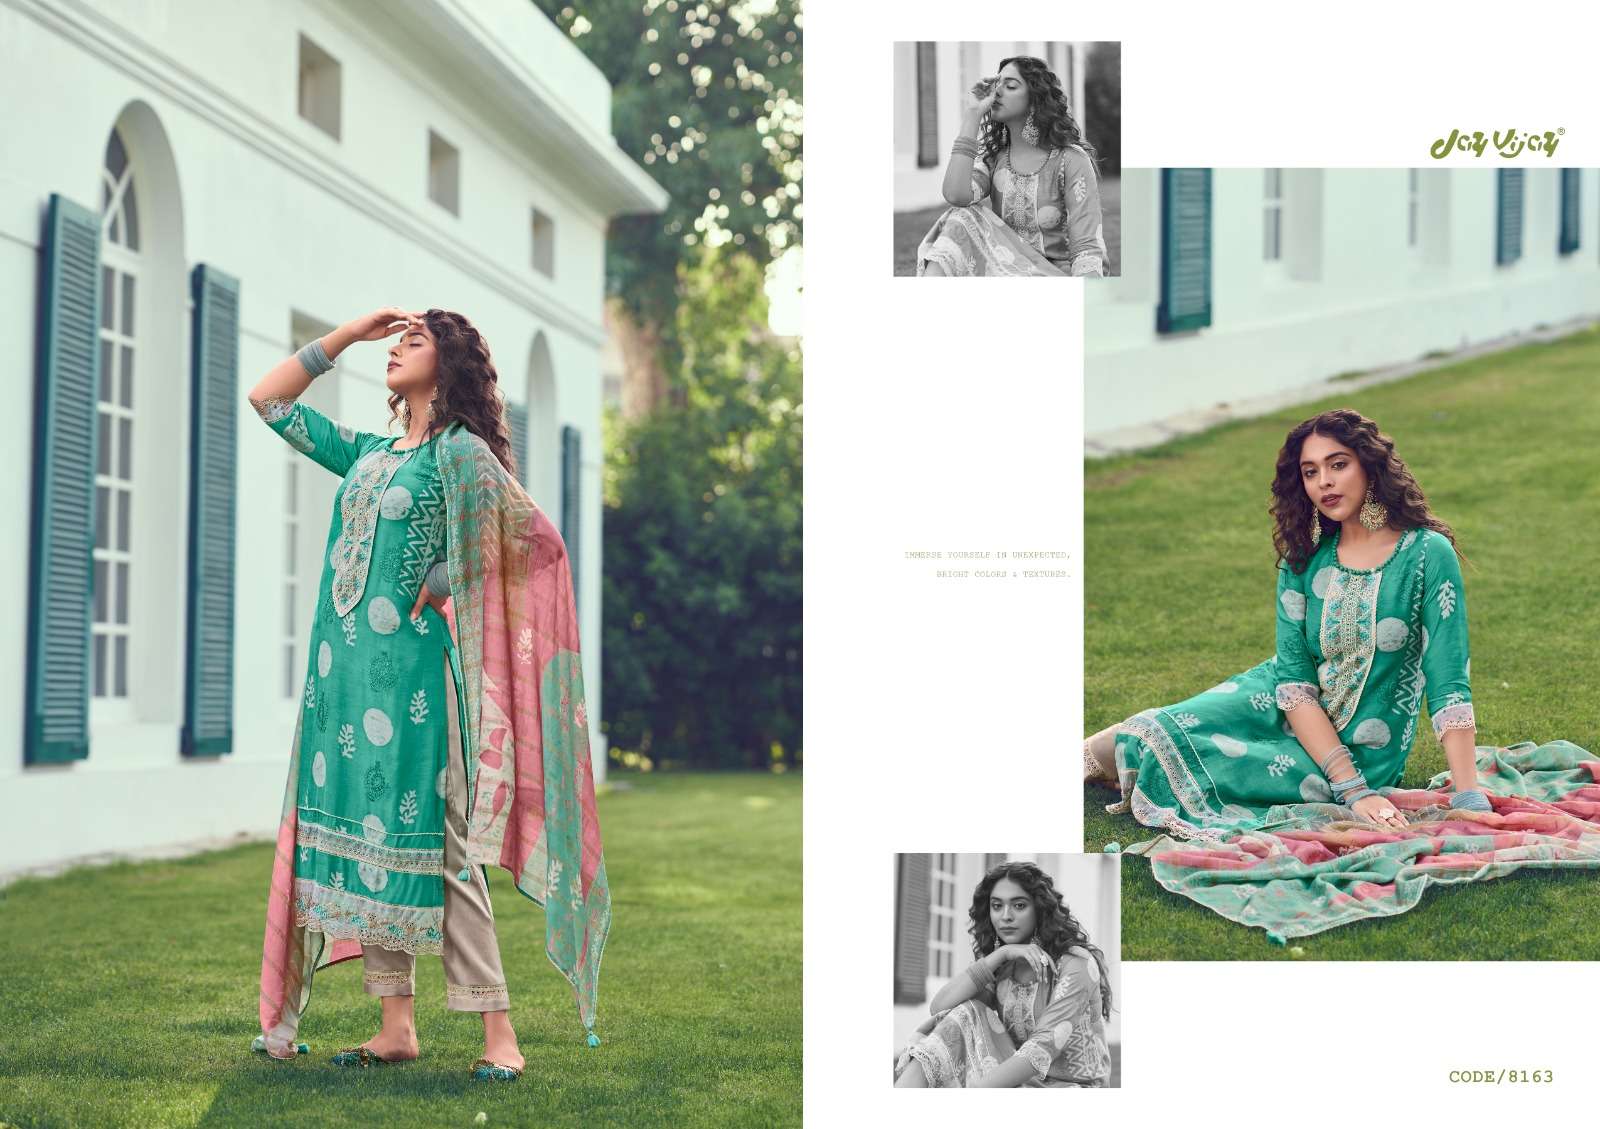 jayvijay new&now vol-10 8161-8168 series party wear designer salwar suits catalogue online dealer surat